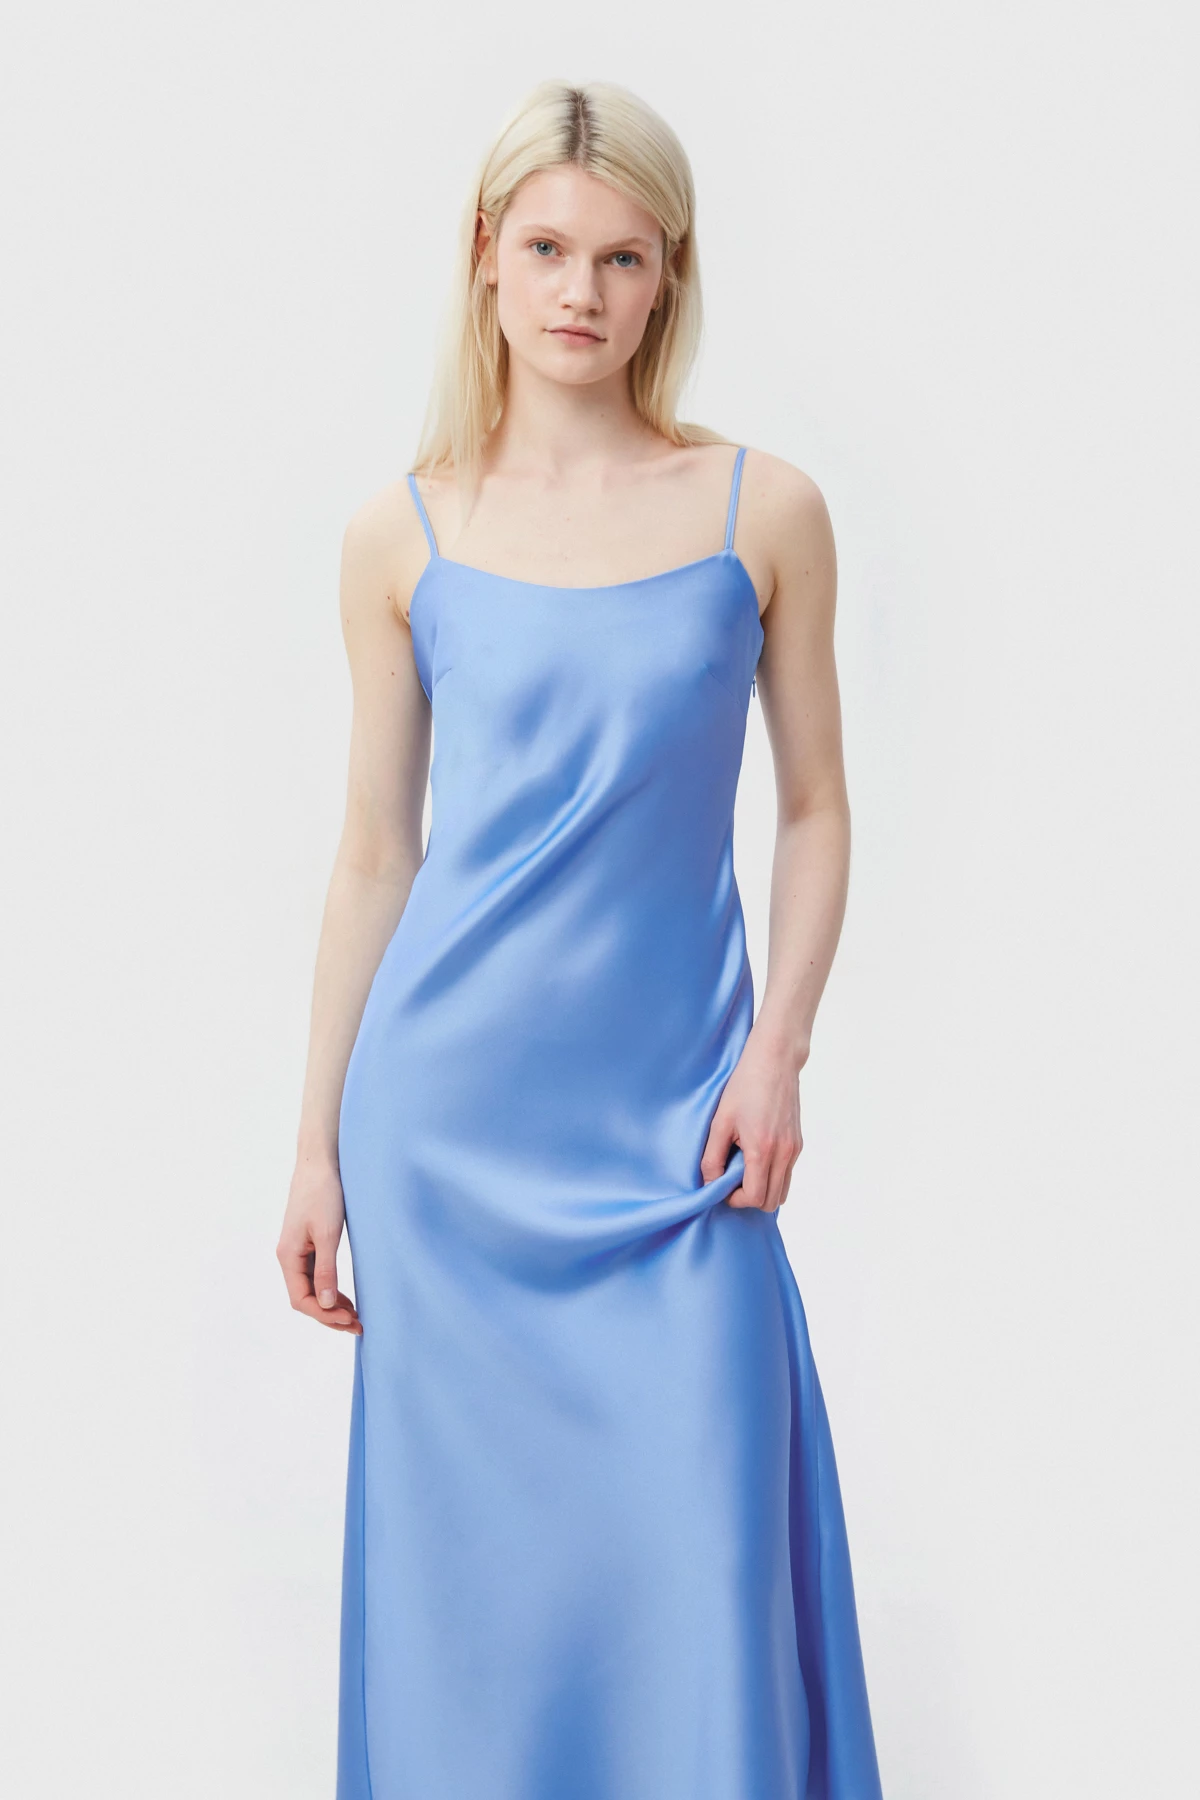 Blue satin open-back dress, photo 6